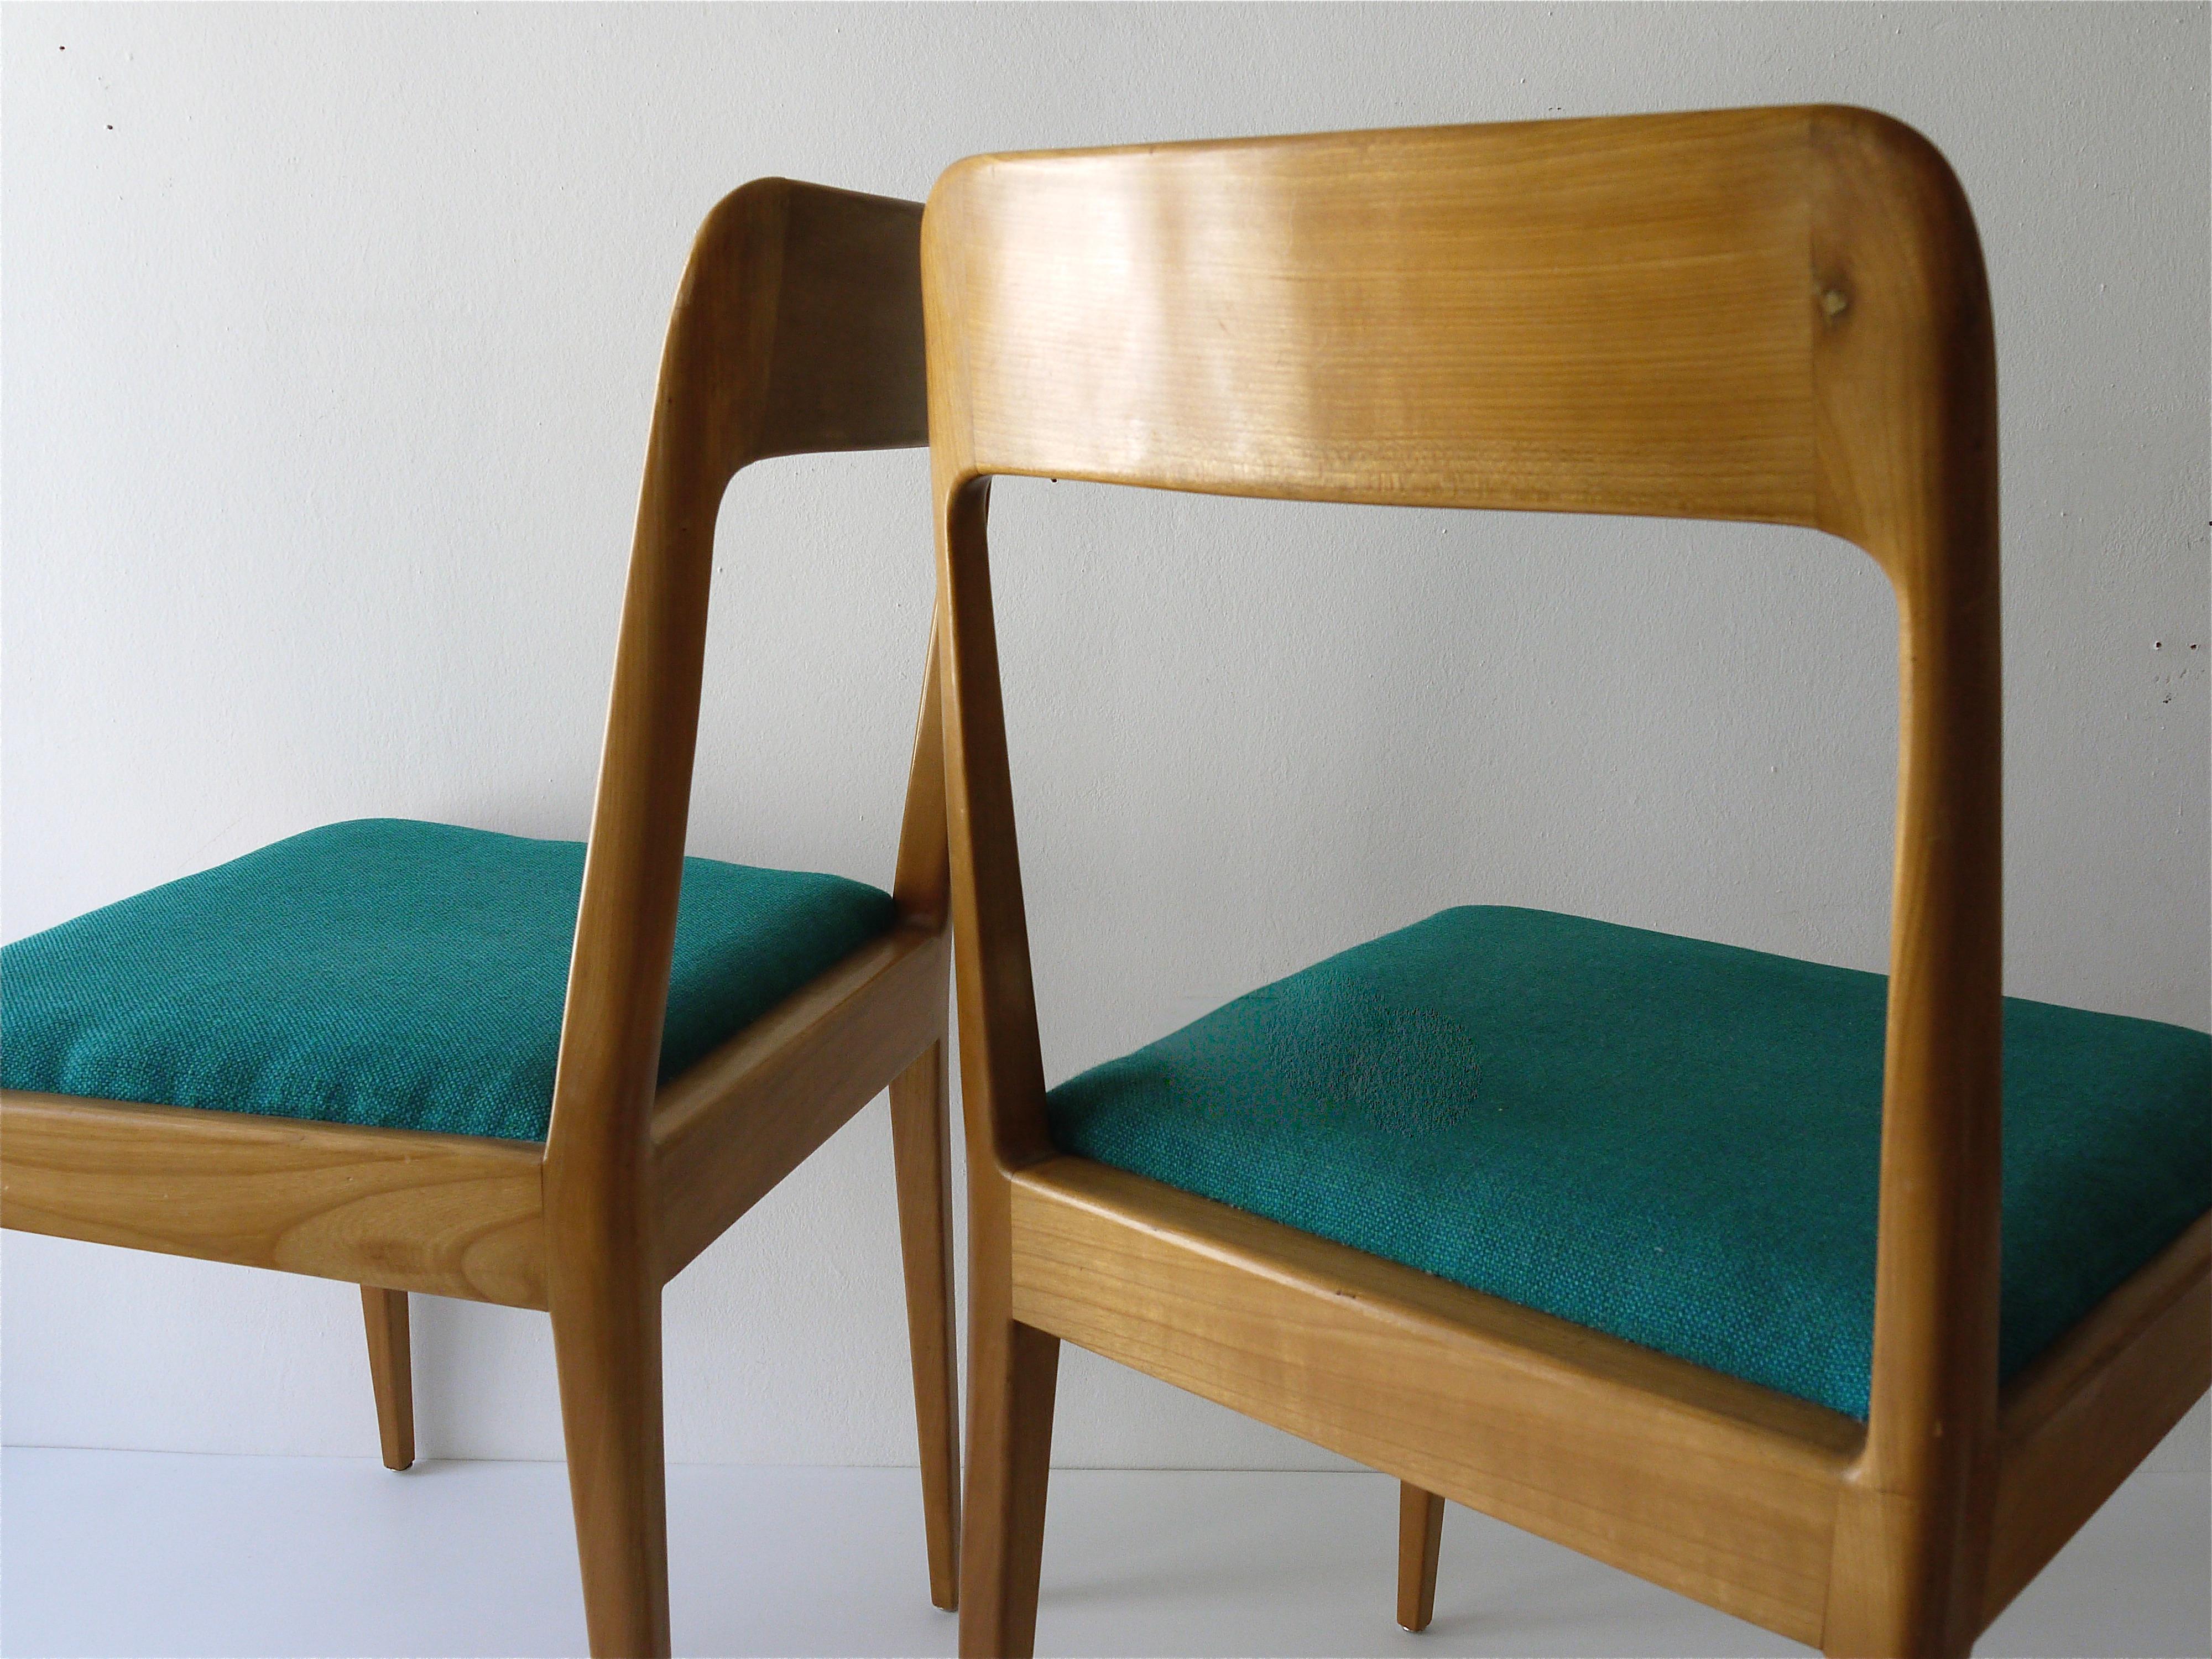 Four Carl Aubock Midcentury Walnut Chairs A7, Vienna, Austria, 1950s For Sale 2